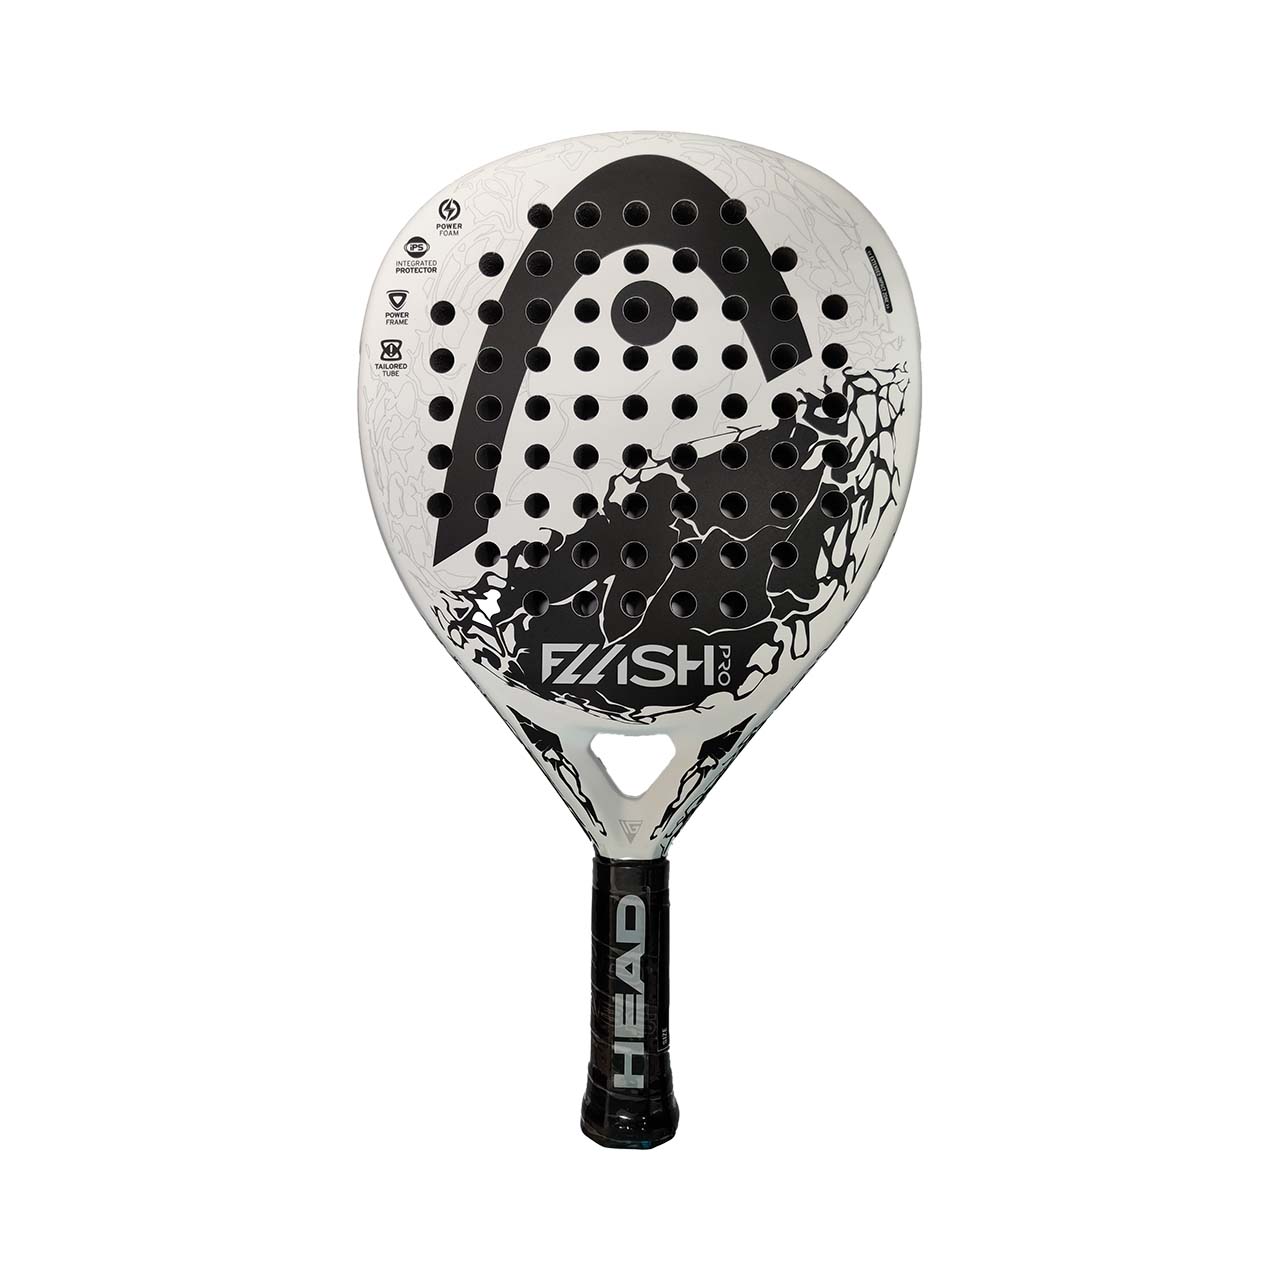 sport service italia padel racket head flash pro 2.0 - Head - Sport Service Italia